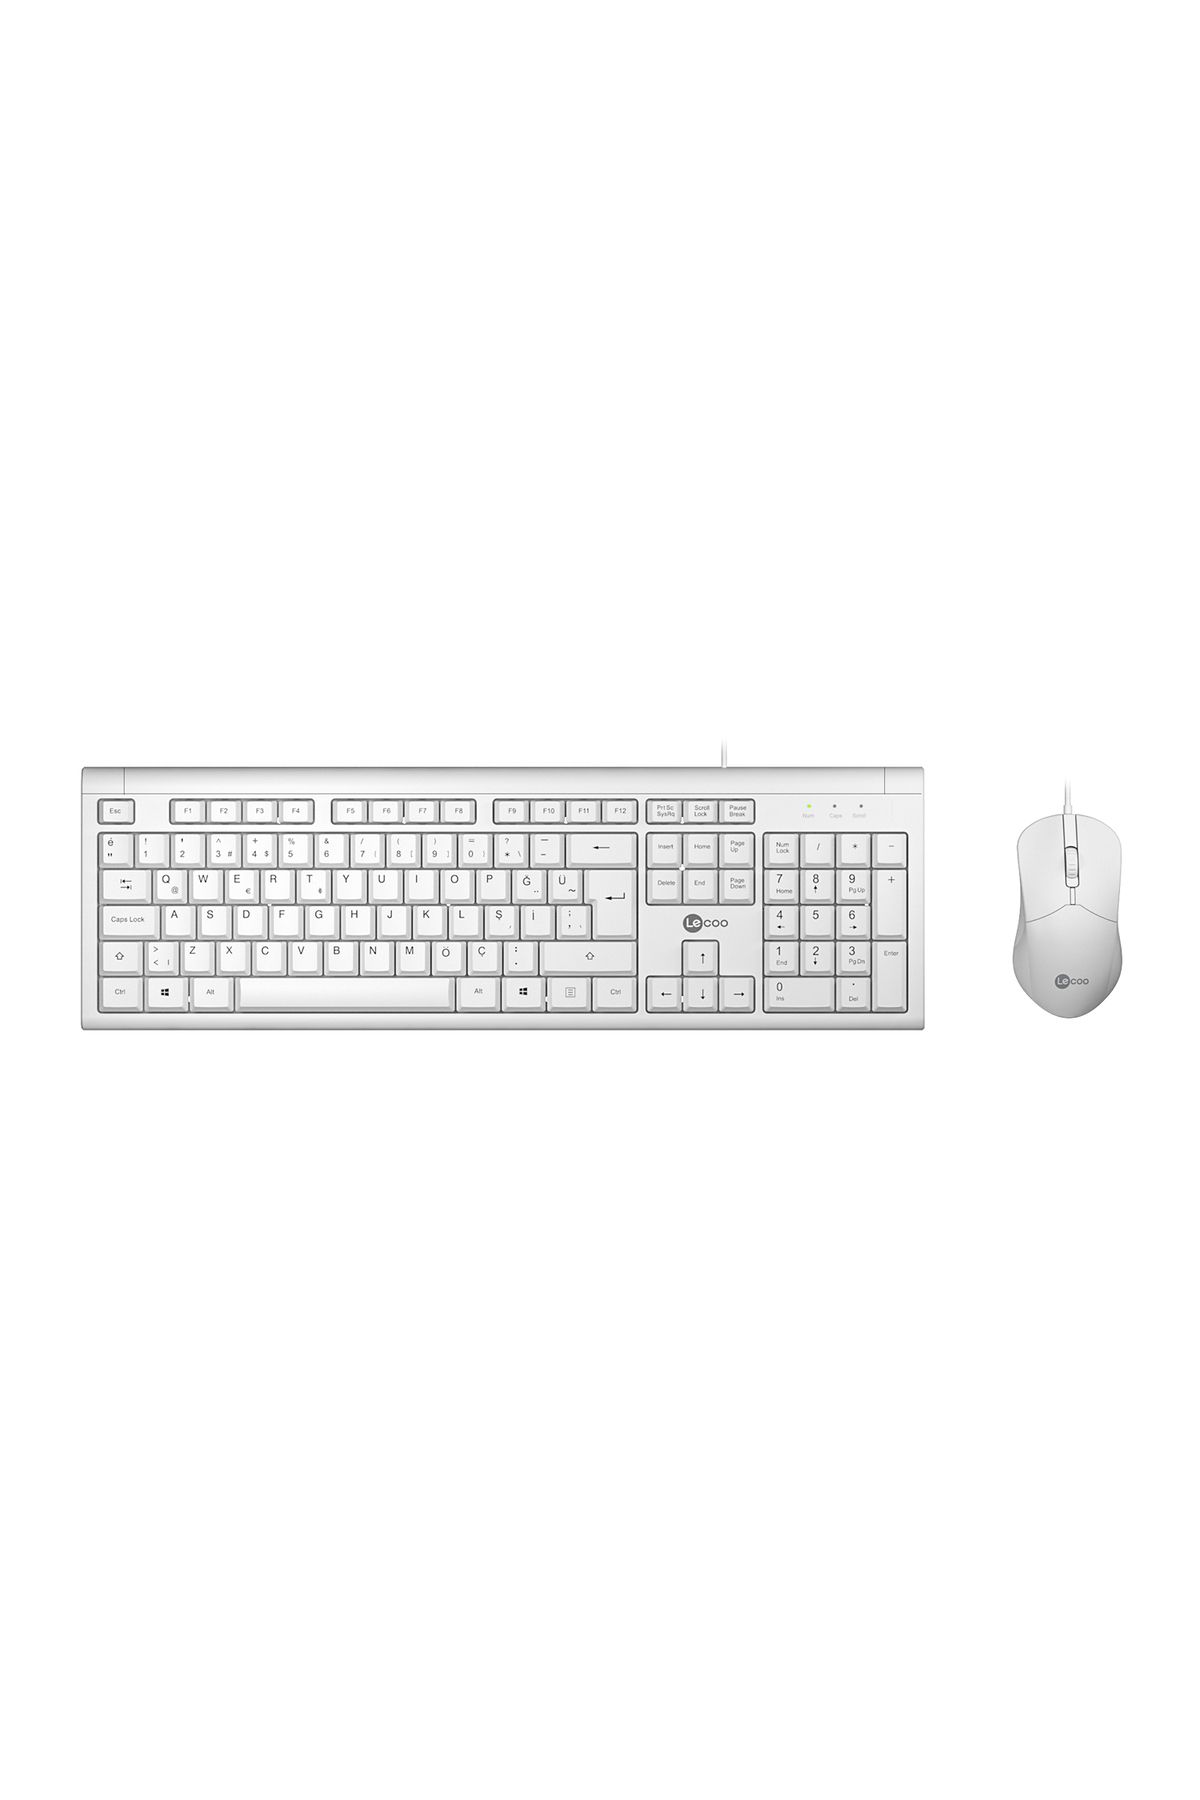 Lecoo CM101 USB Kablolu Türkçe Q Klavye & Mouse Set Beyaz